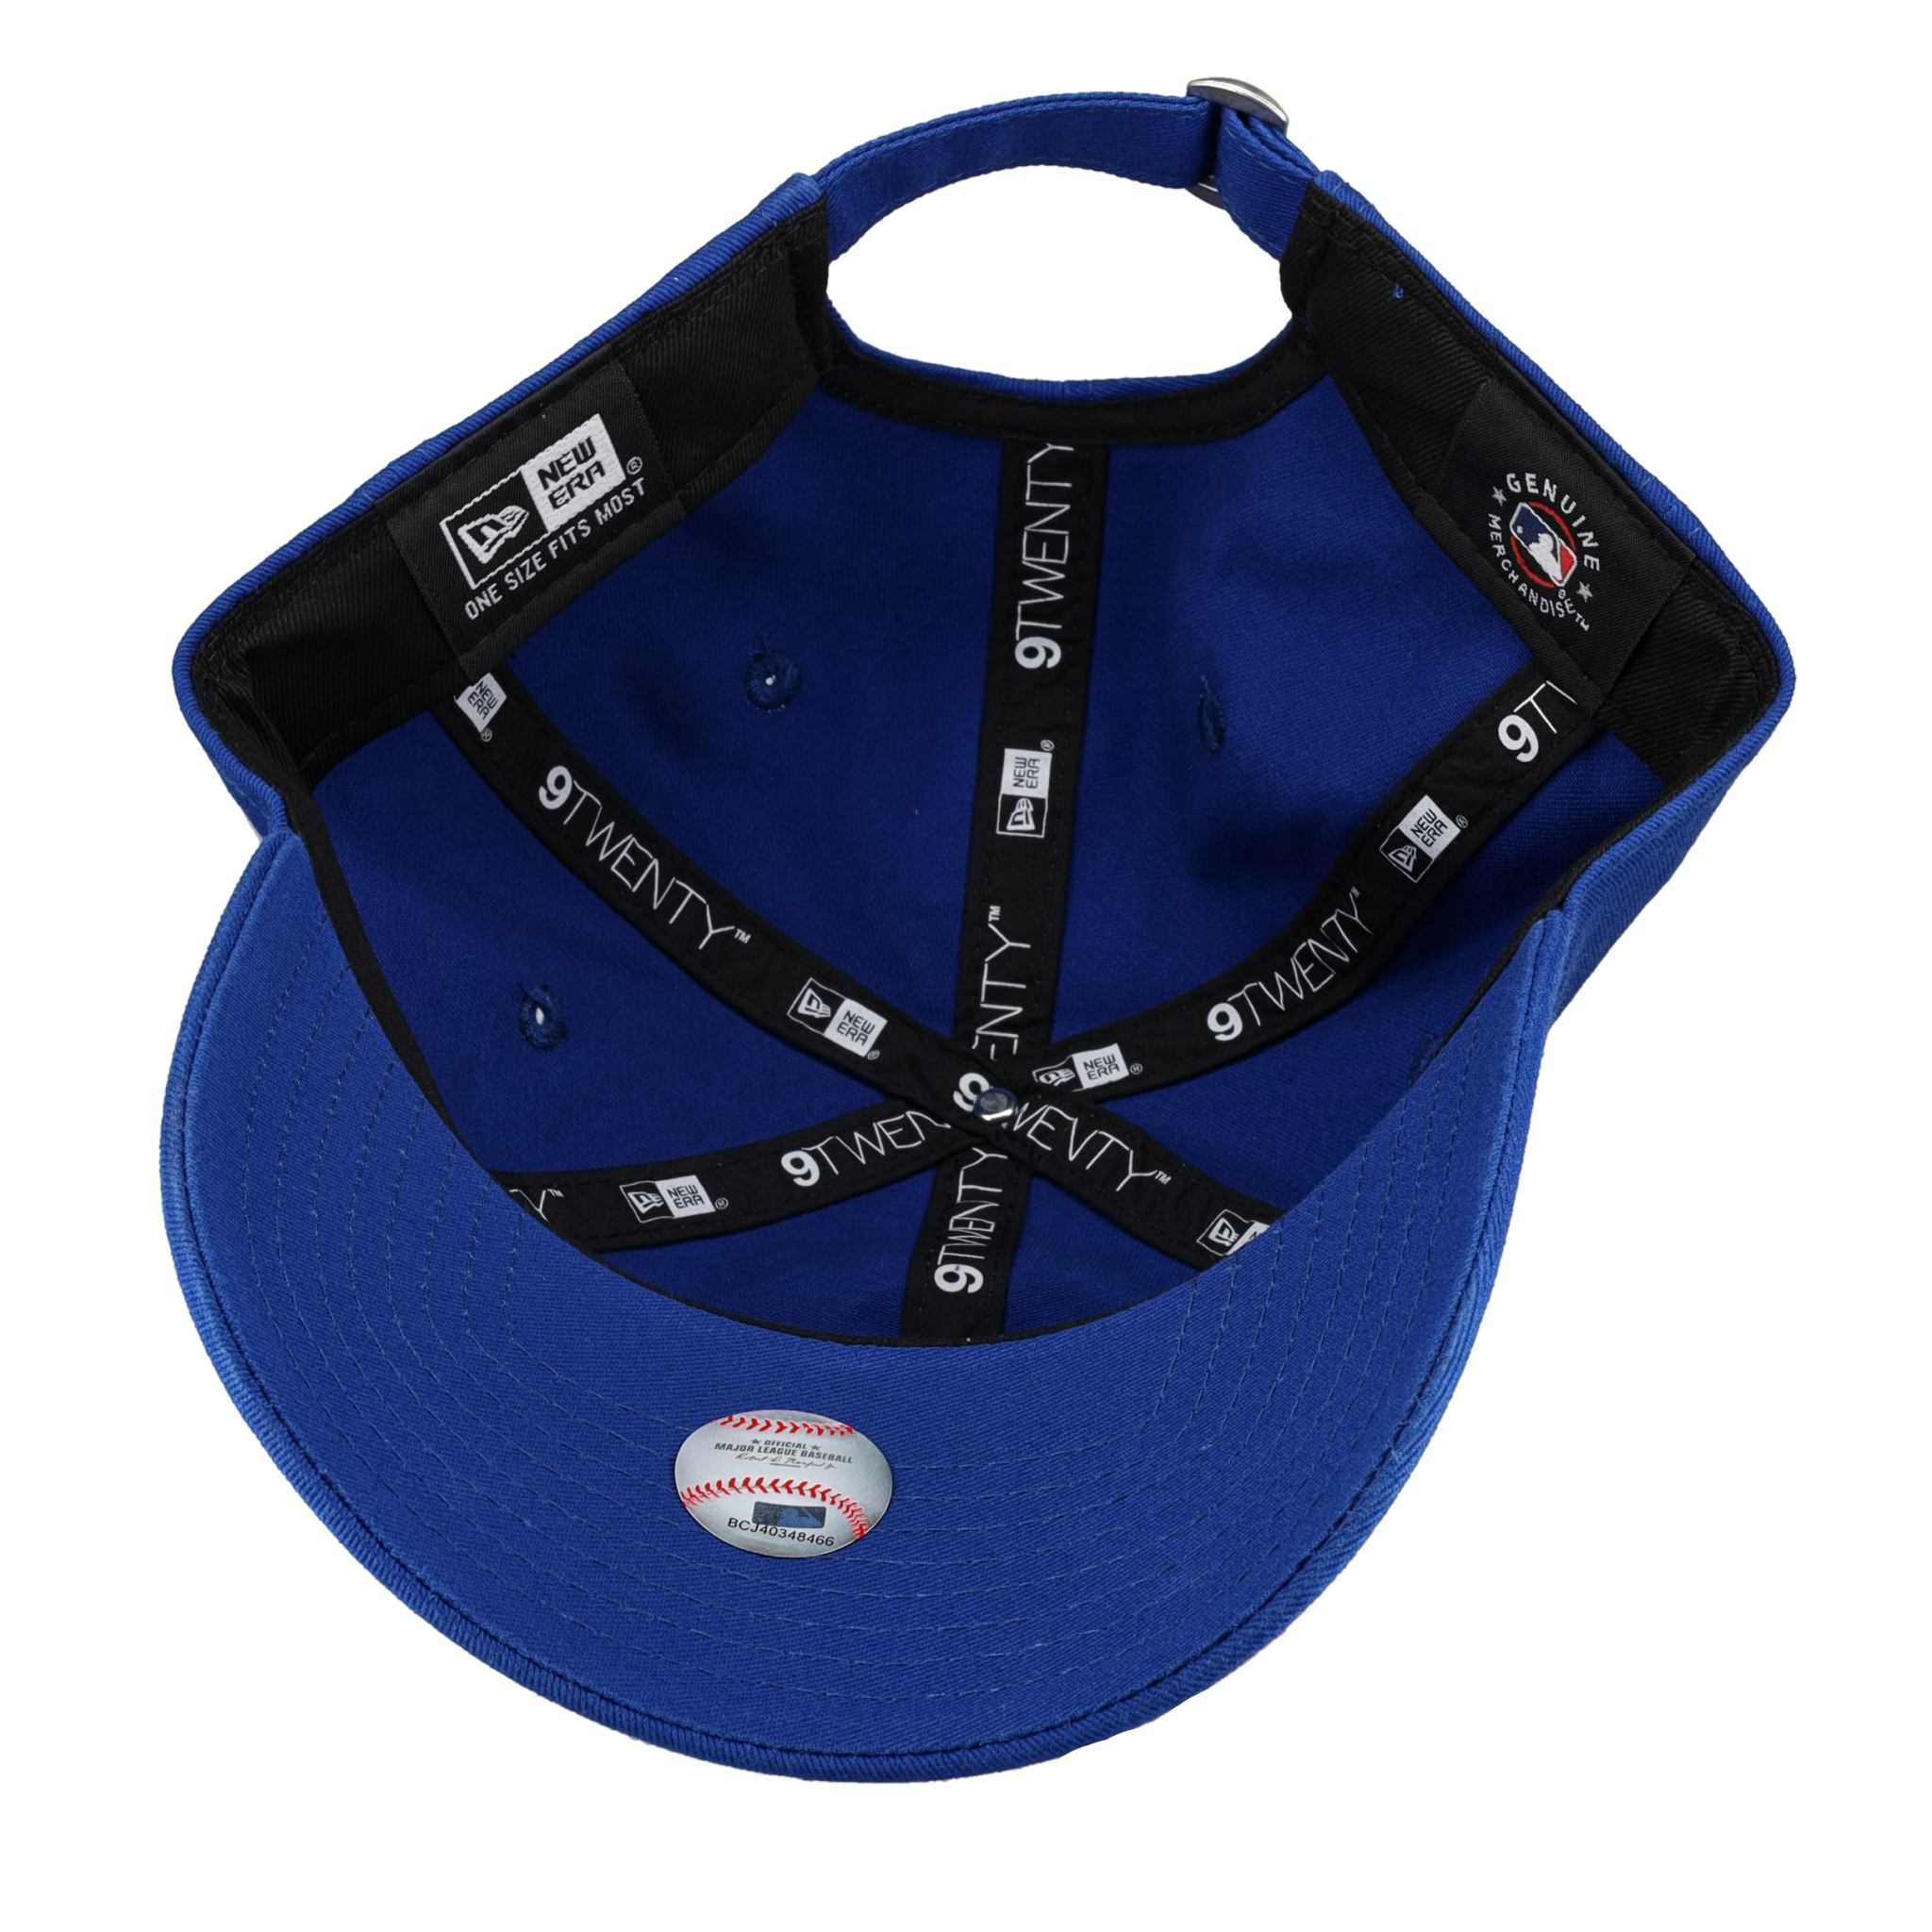 New York Yankees New Era 9Twenty Adjustable Hat (Royal)